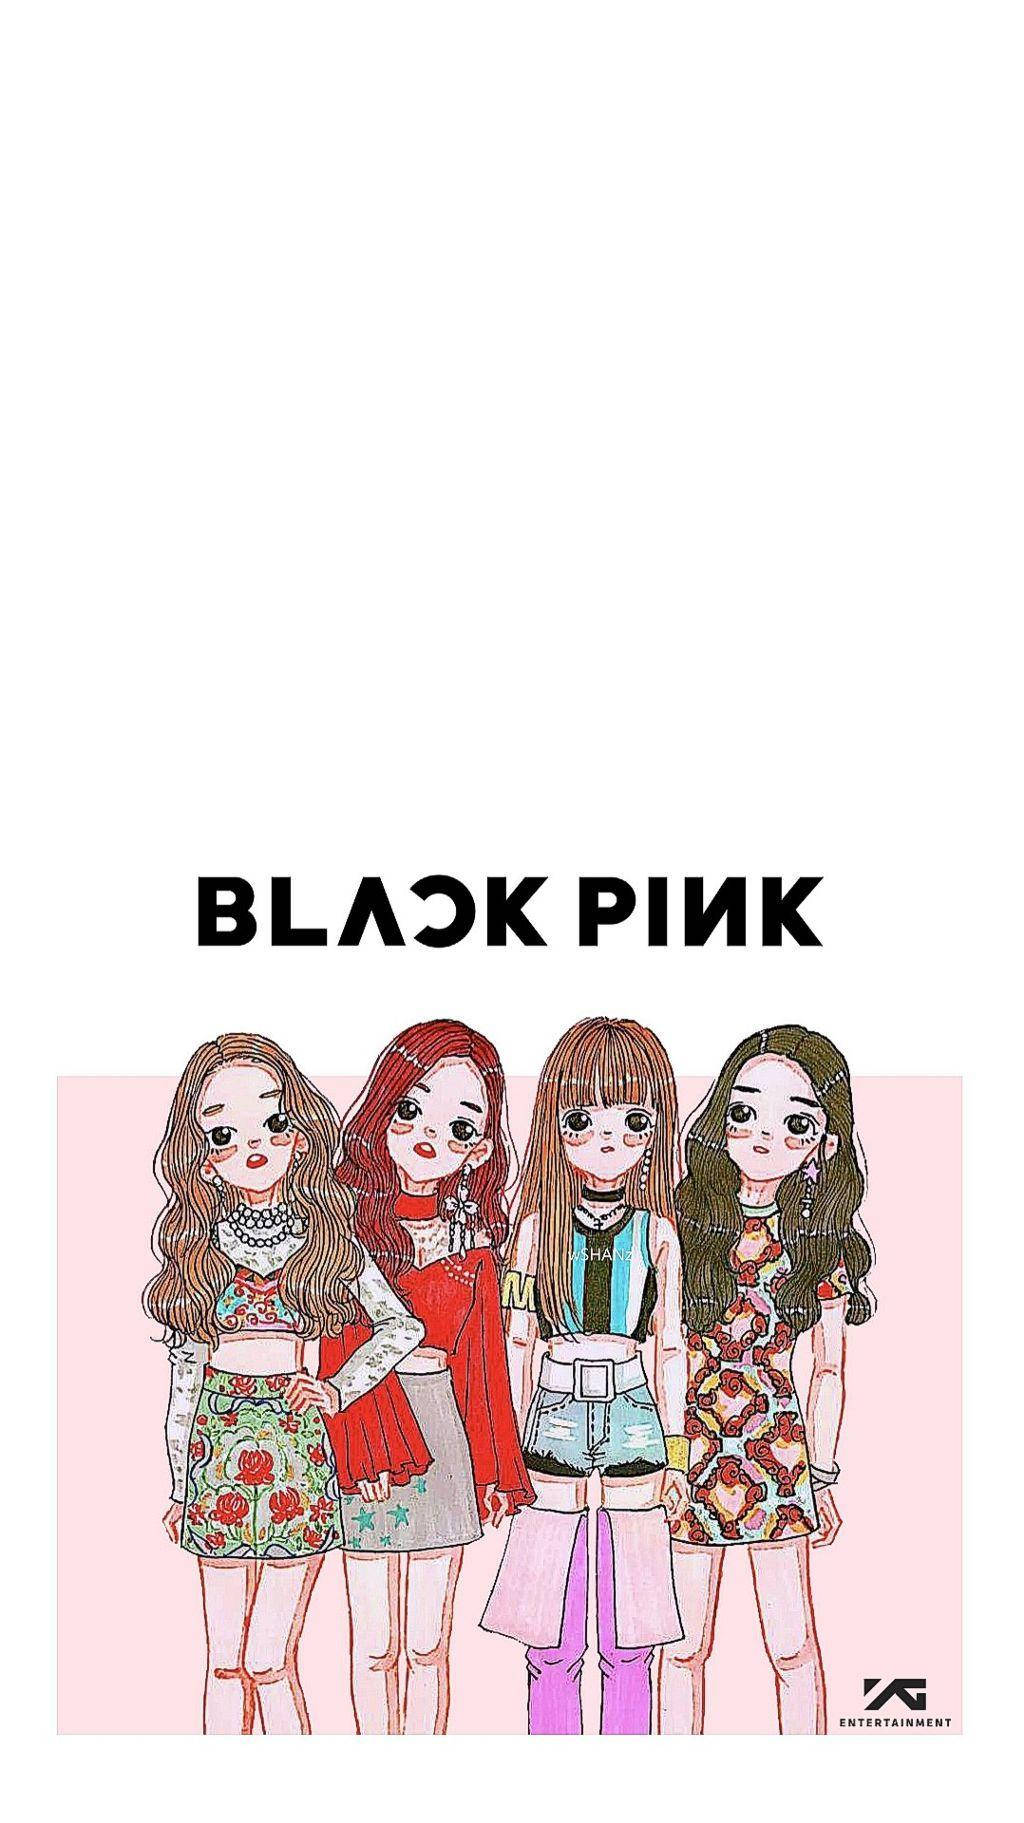 Blackpink Anime Version Of The Girls Background